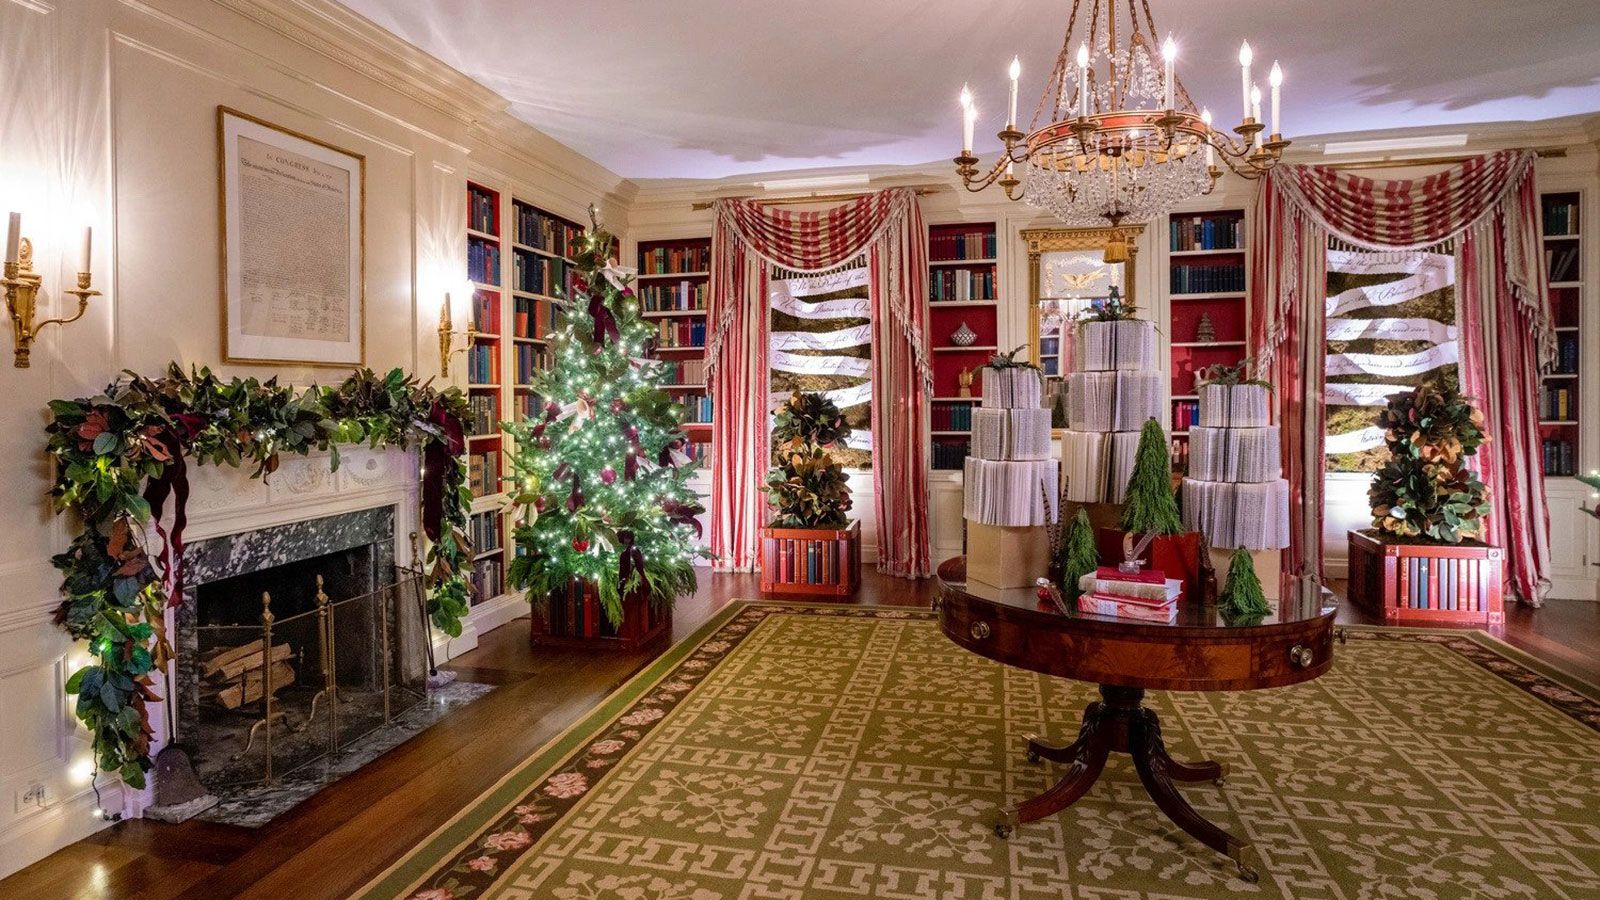 White House reveals 2022 Christmas ornament